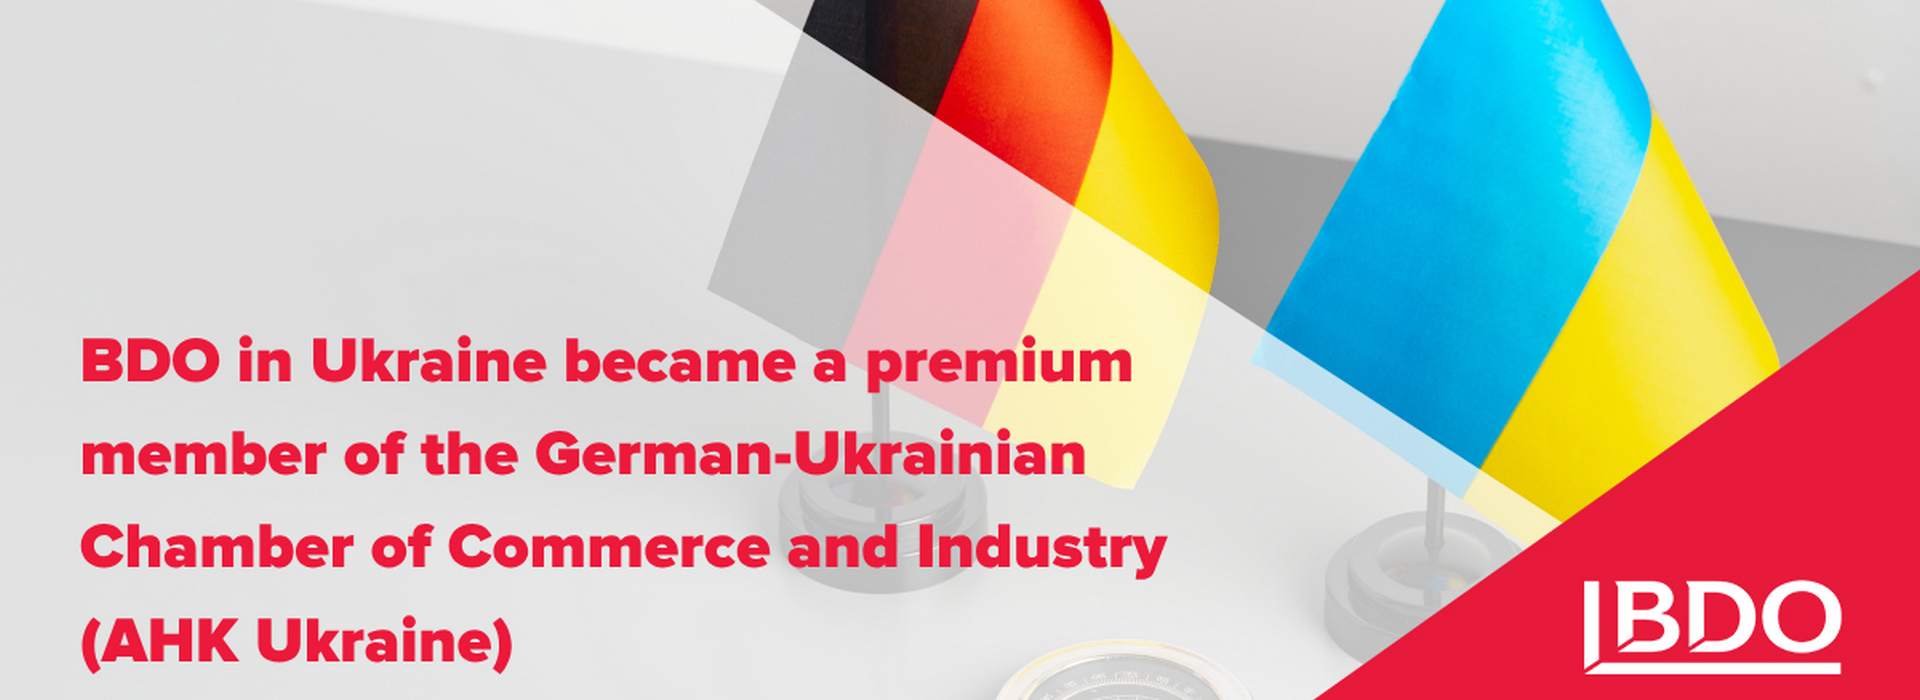 BDO in Ukraine Became a Premium Member of the German-Ukrainian Chamber of Commerce and Industry (AHK Ukraine)